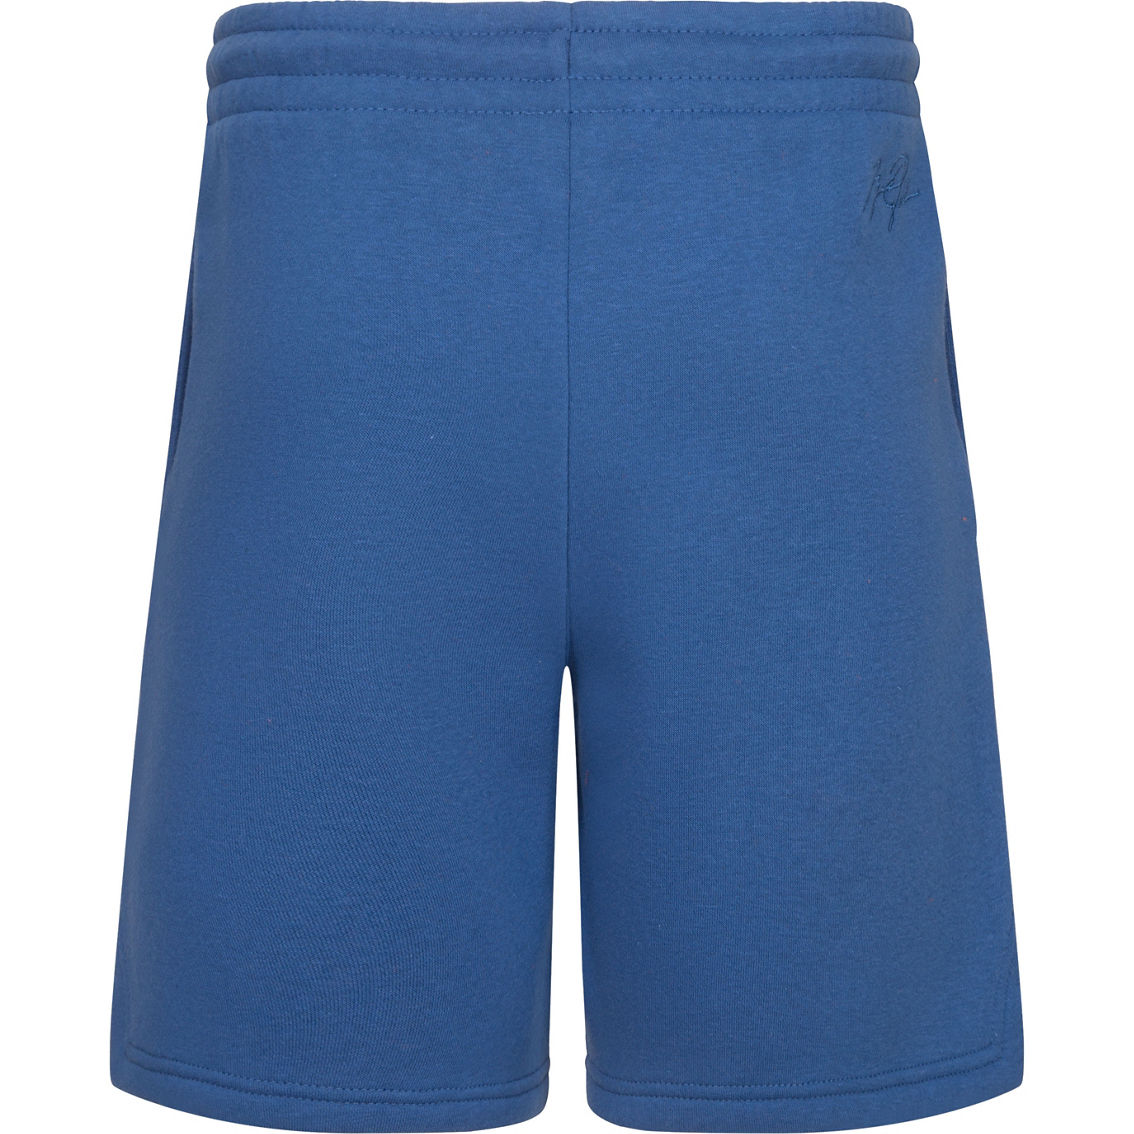 Jordan Boys Essentials Shorts - Image 2 of 3